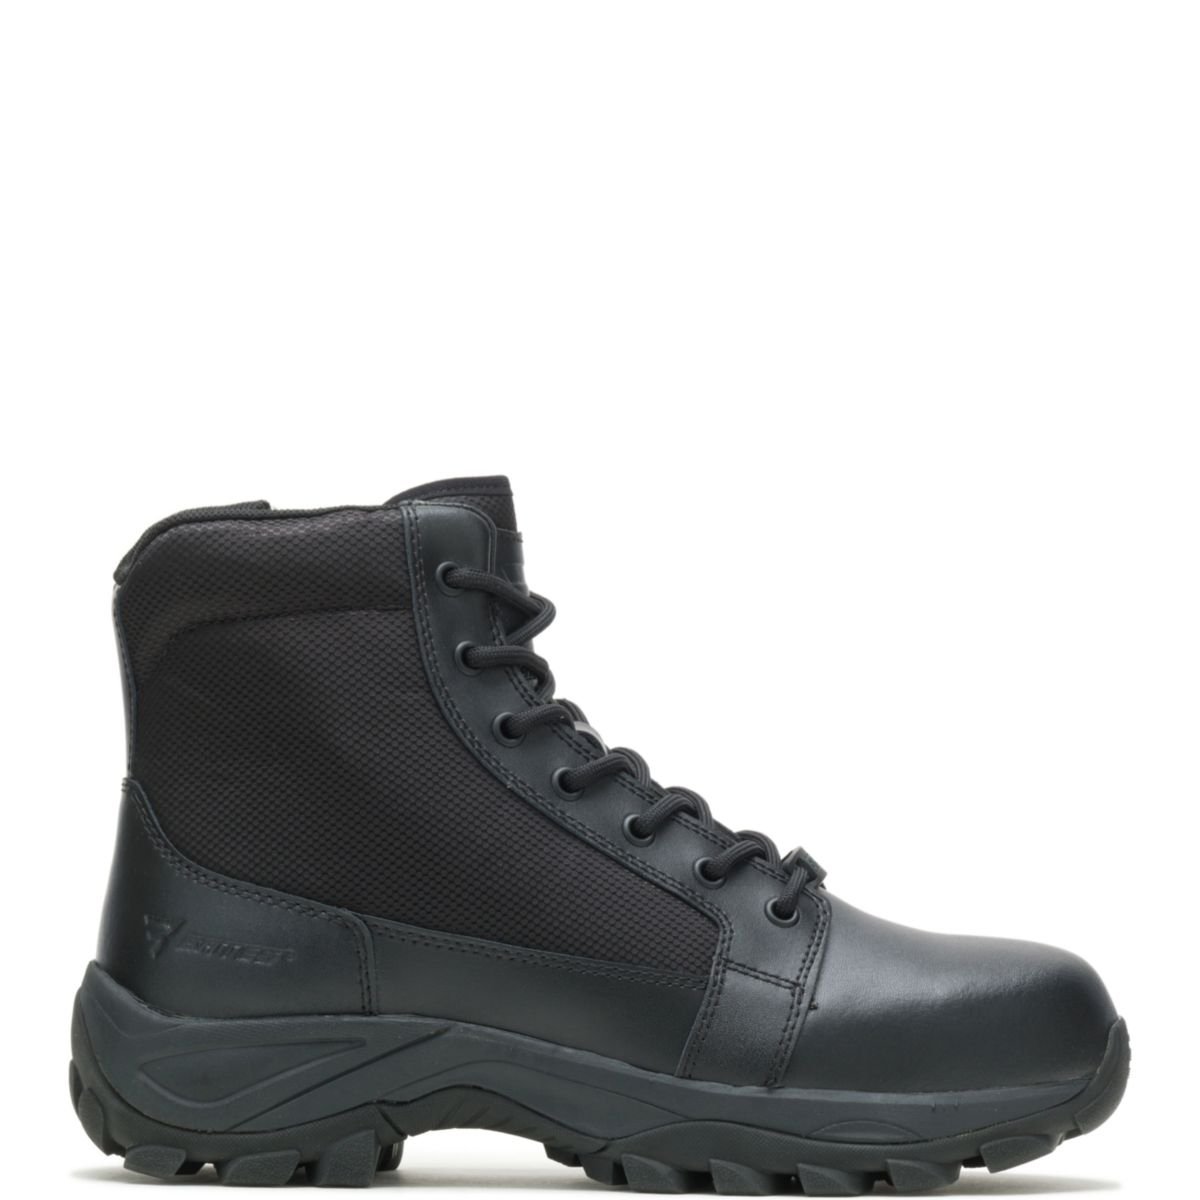 Bates Men's Fuse Zip 6-Inch Side Zip Steel Toe Work Boot Black - E06505 BLACK - BLACK, 10.5